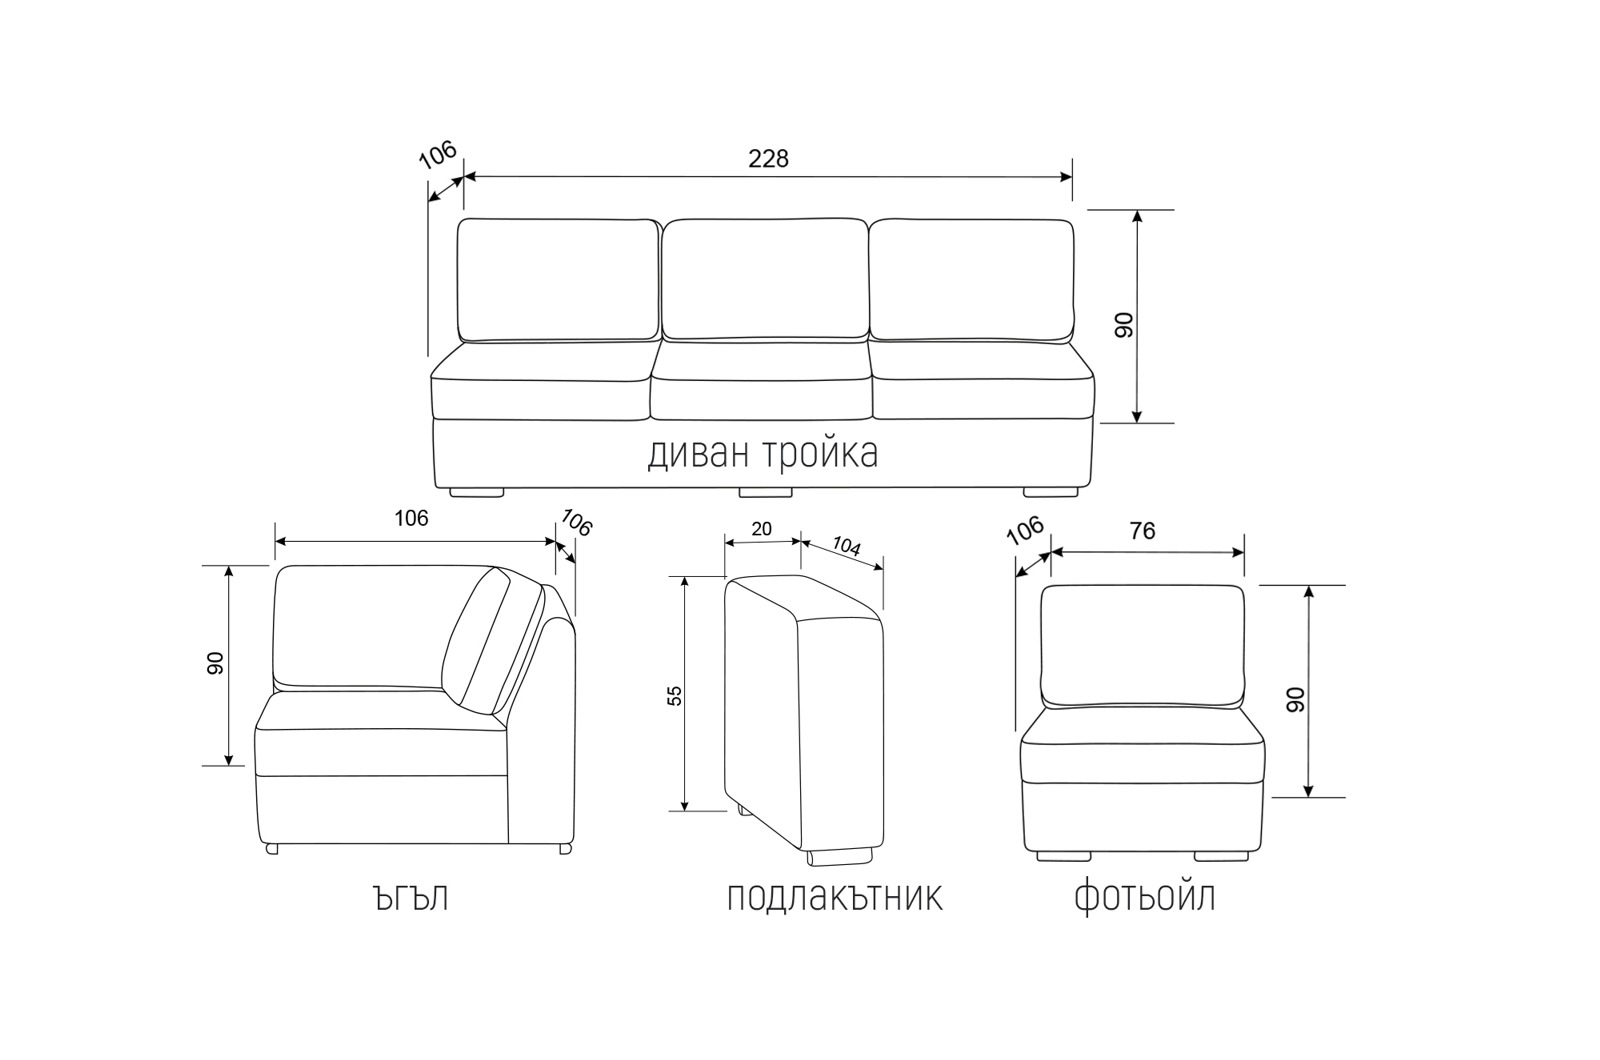 Схема модулен диван Сена